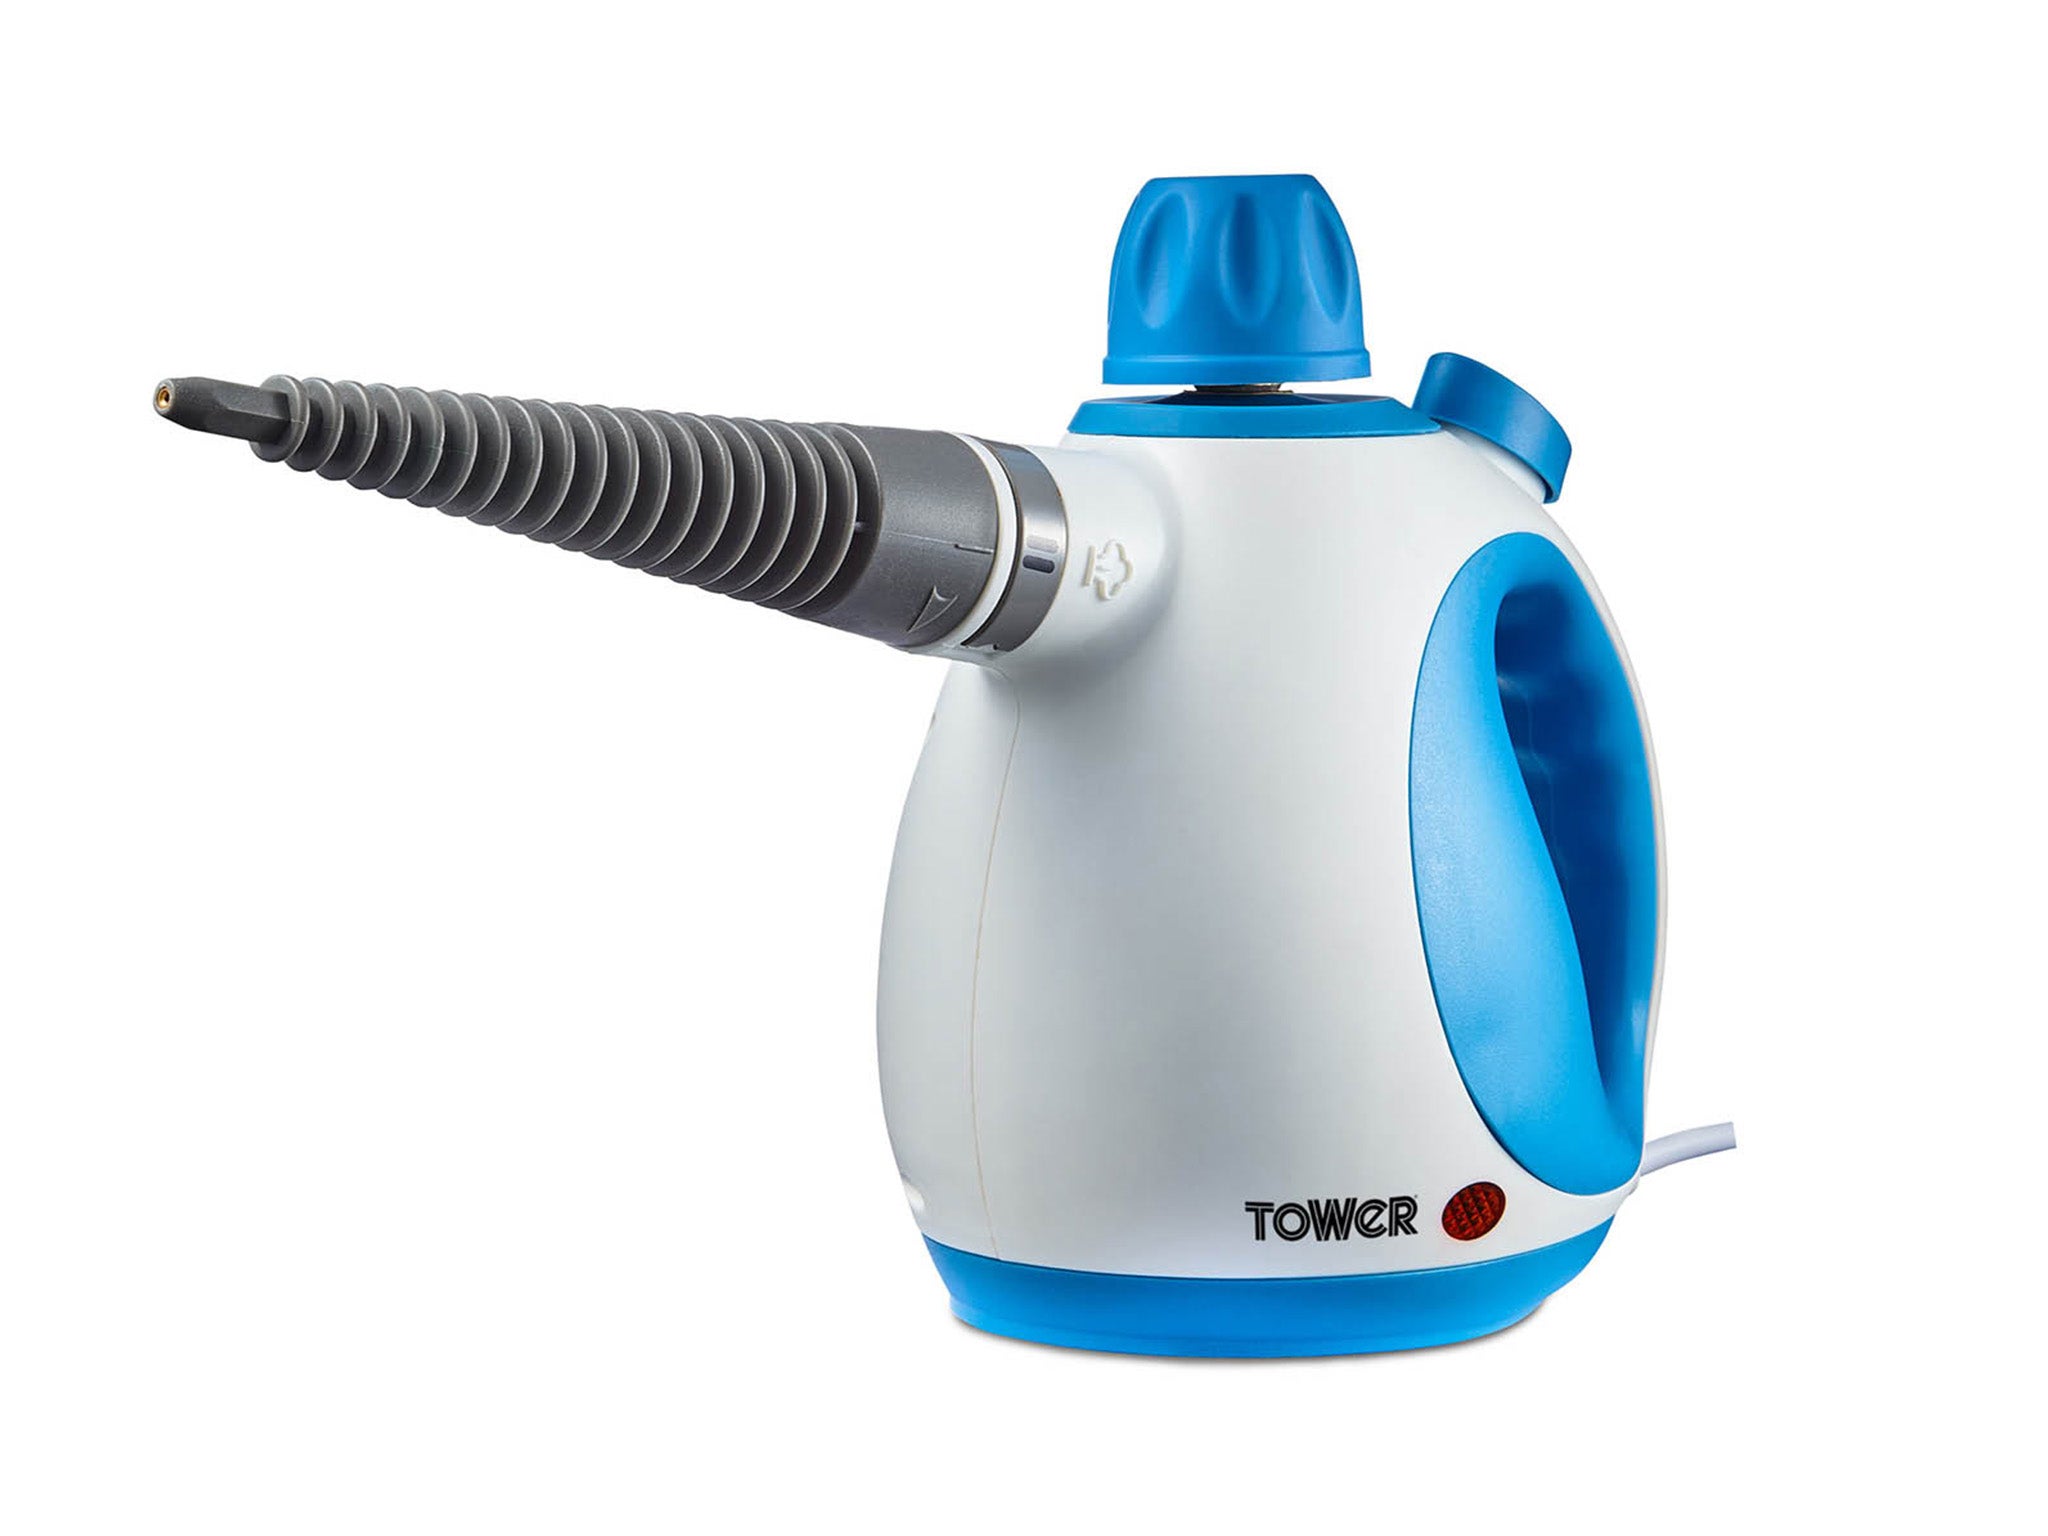 Tower THS10 handheld steam cleaner